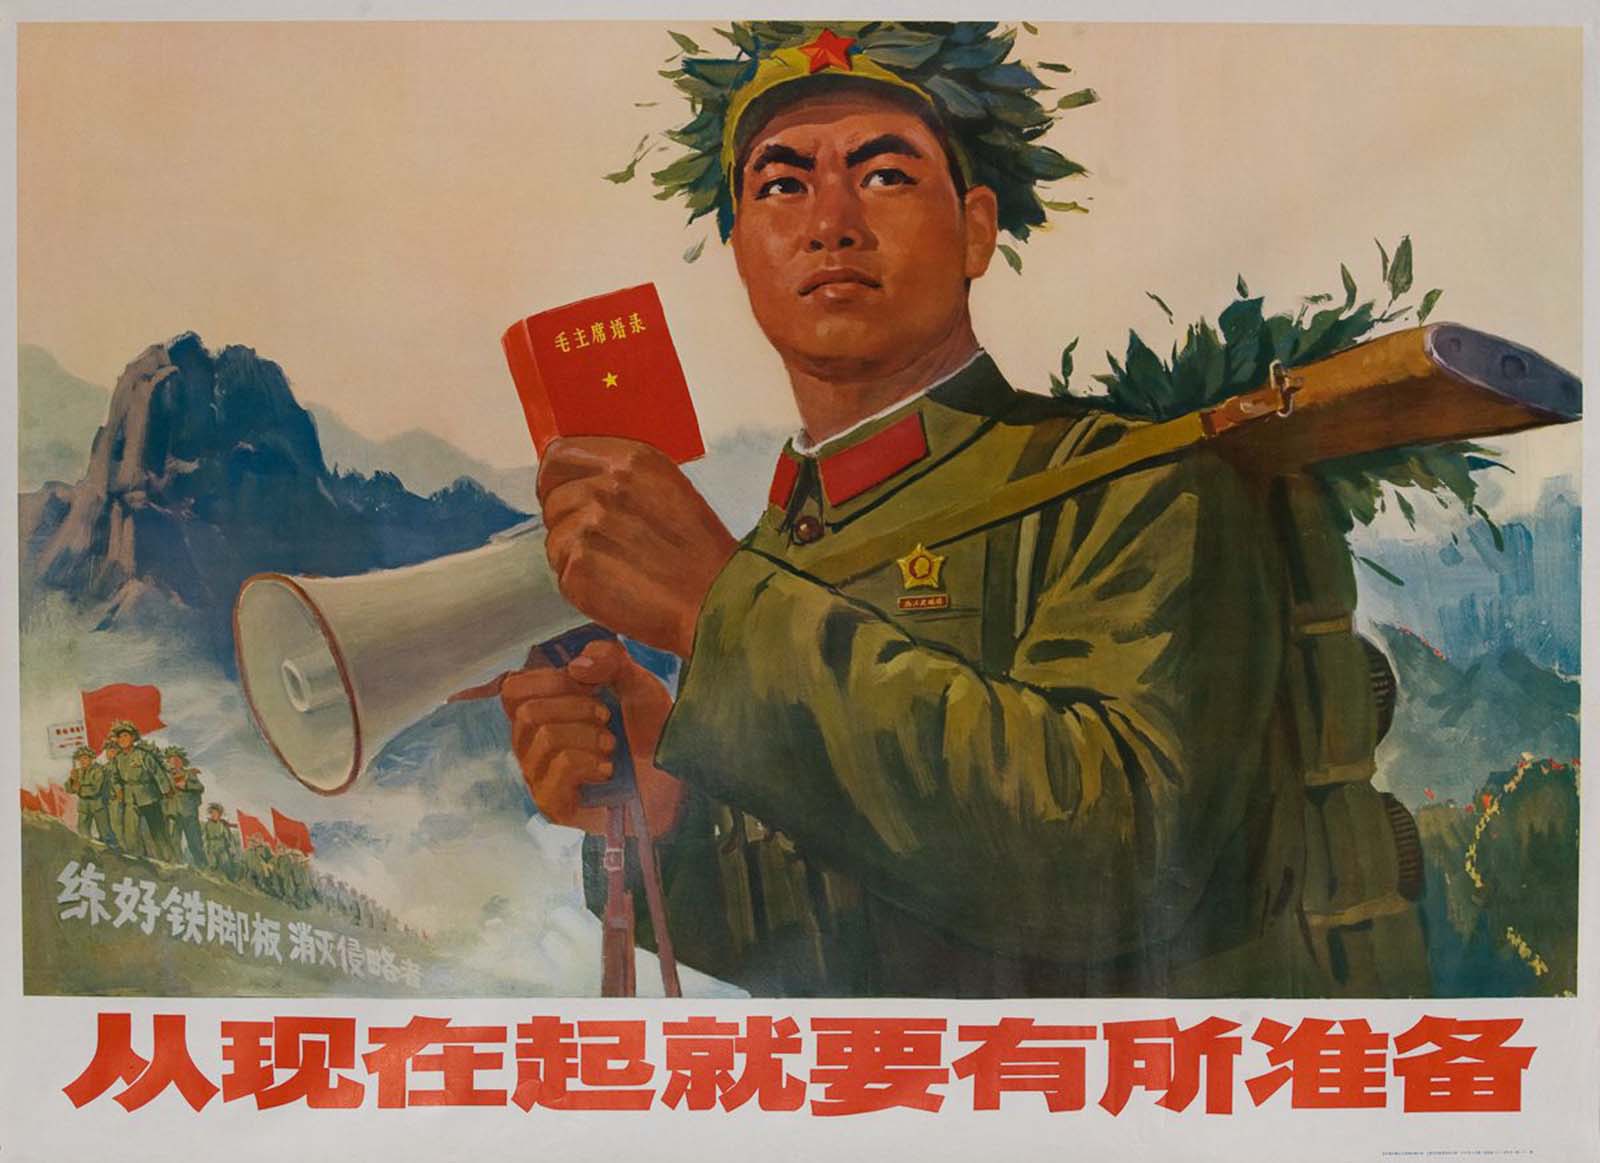 Chinese Cultural Revolution propaganda posters, 1960s-1970s - Rare  Historical Photos